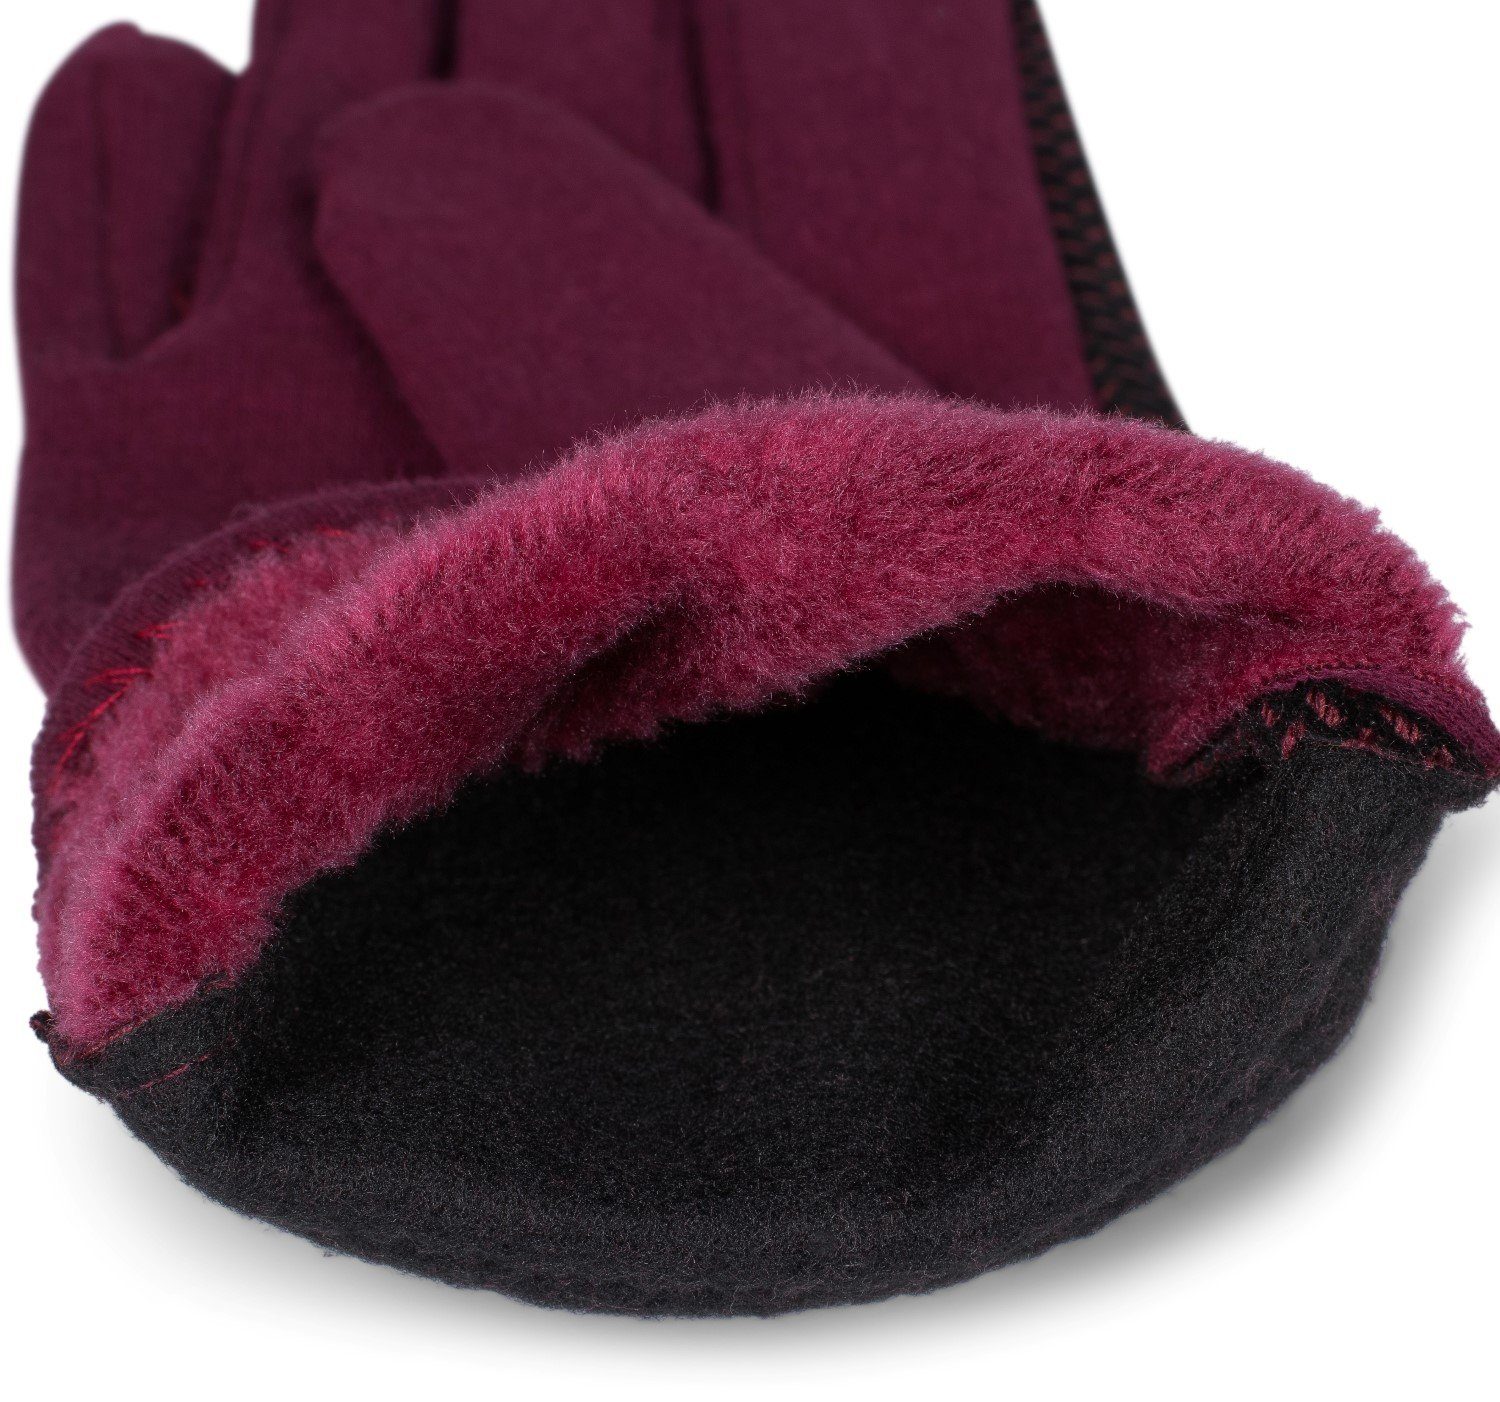 styleBREAKER Baumwollhandschuhe Bordeaux-Rot weichem Riffel Muster mit Handschuhe Touchscreen